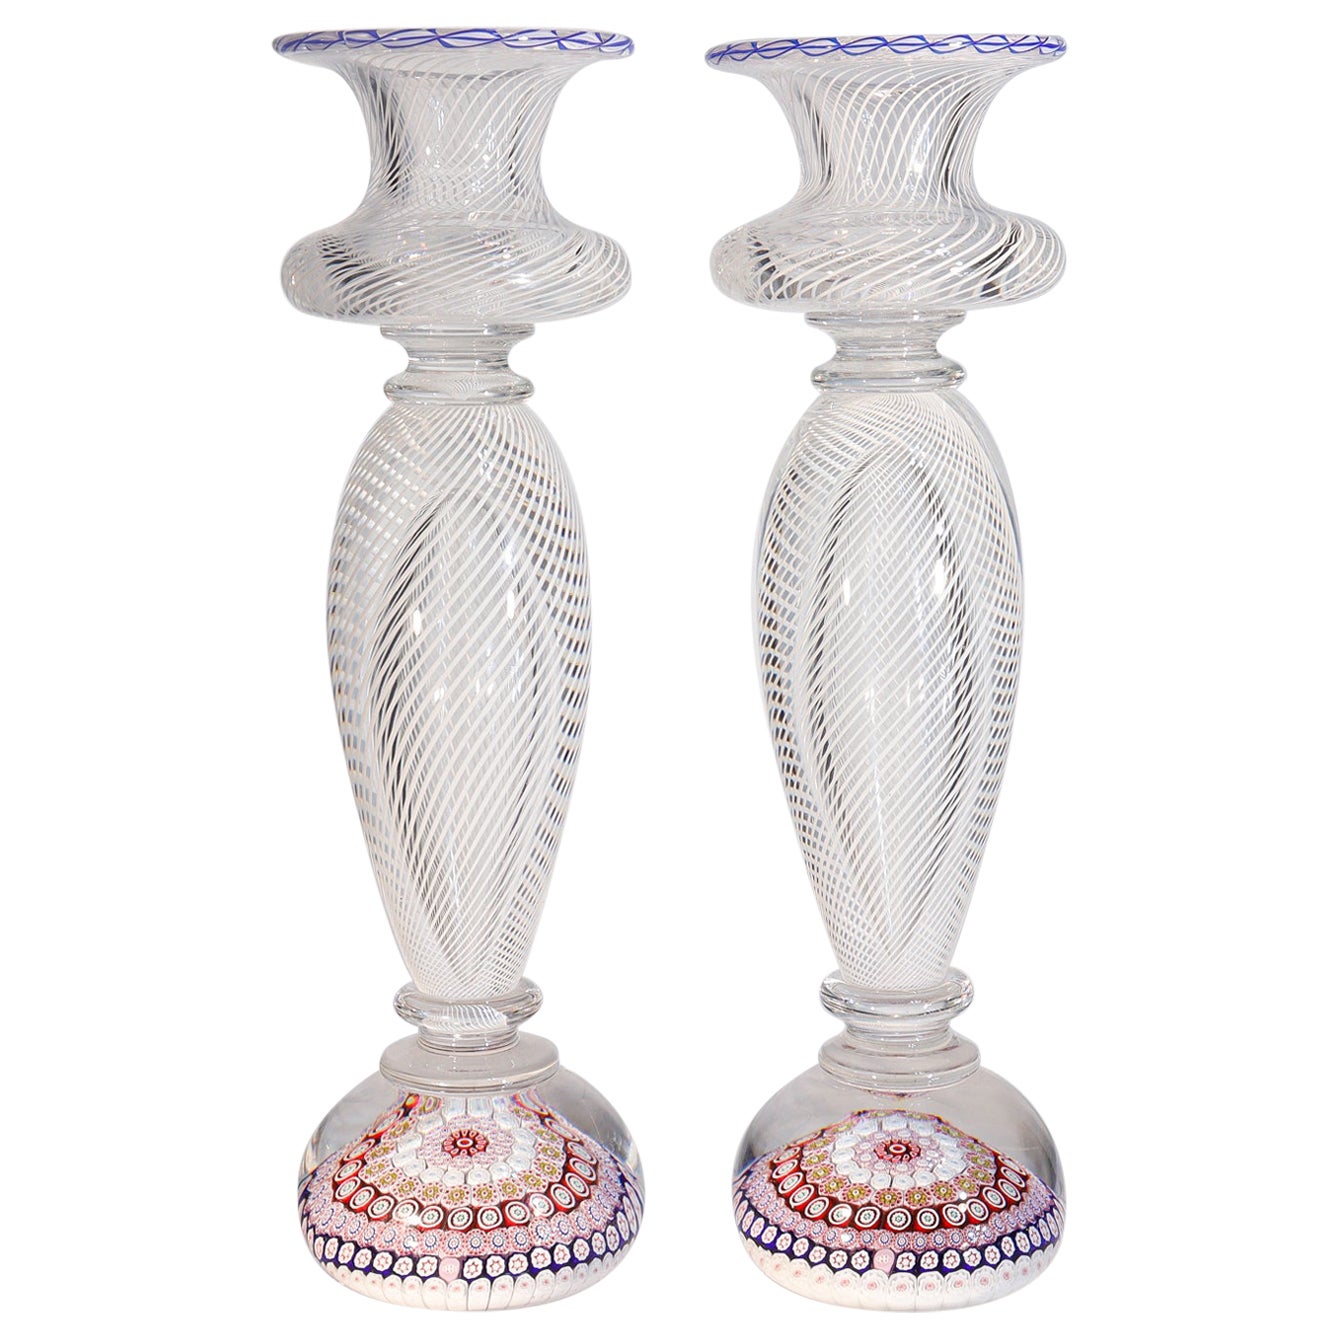 Pair of Saint Louis Glass Millefiori and Latticino Paperweight Candlesticks